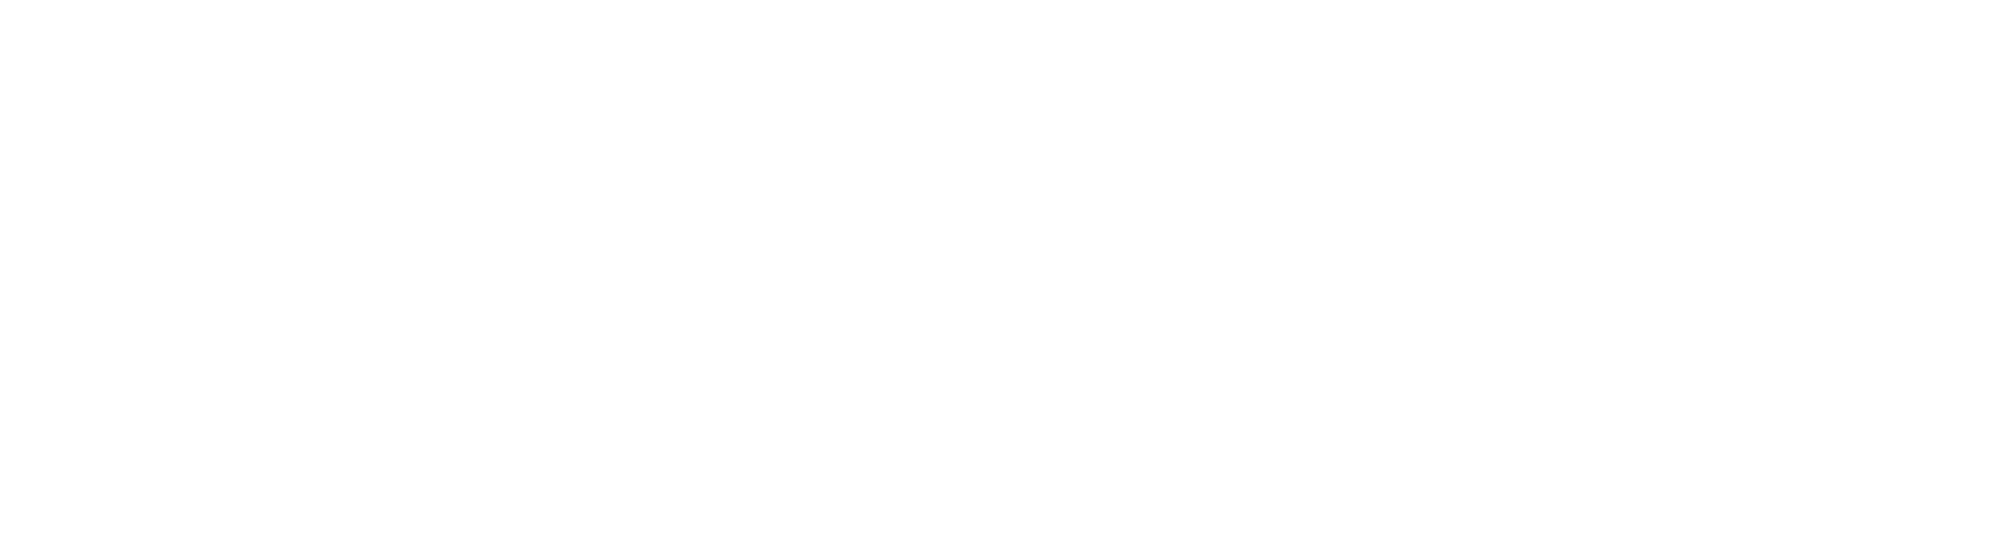 Metassure Insurance